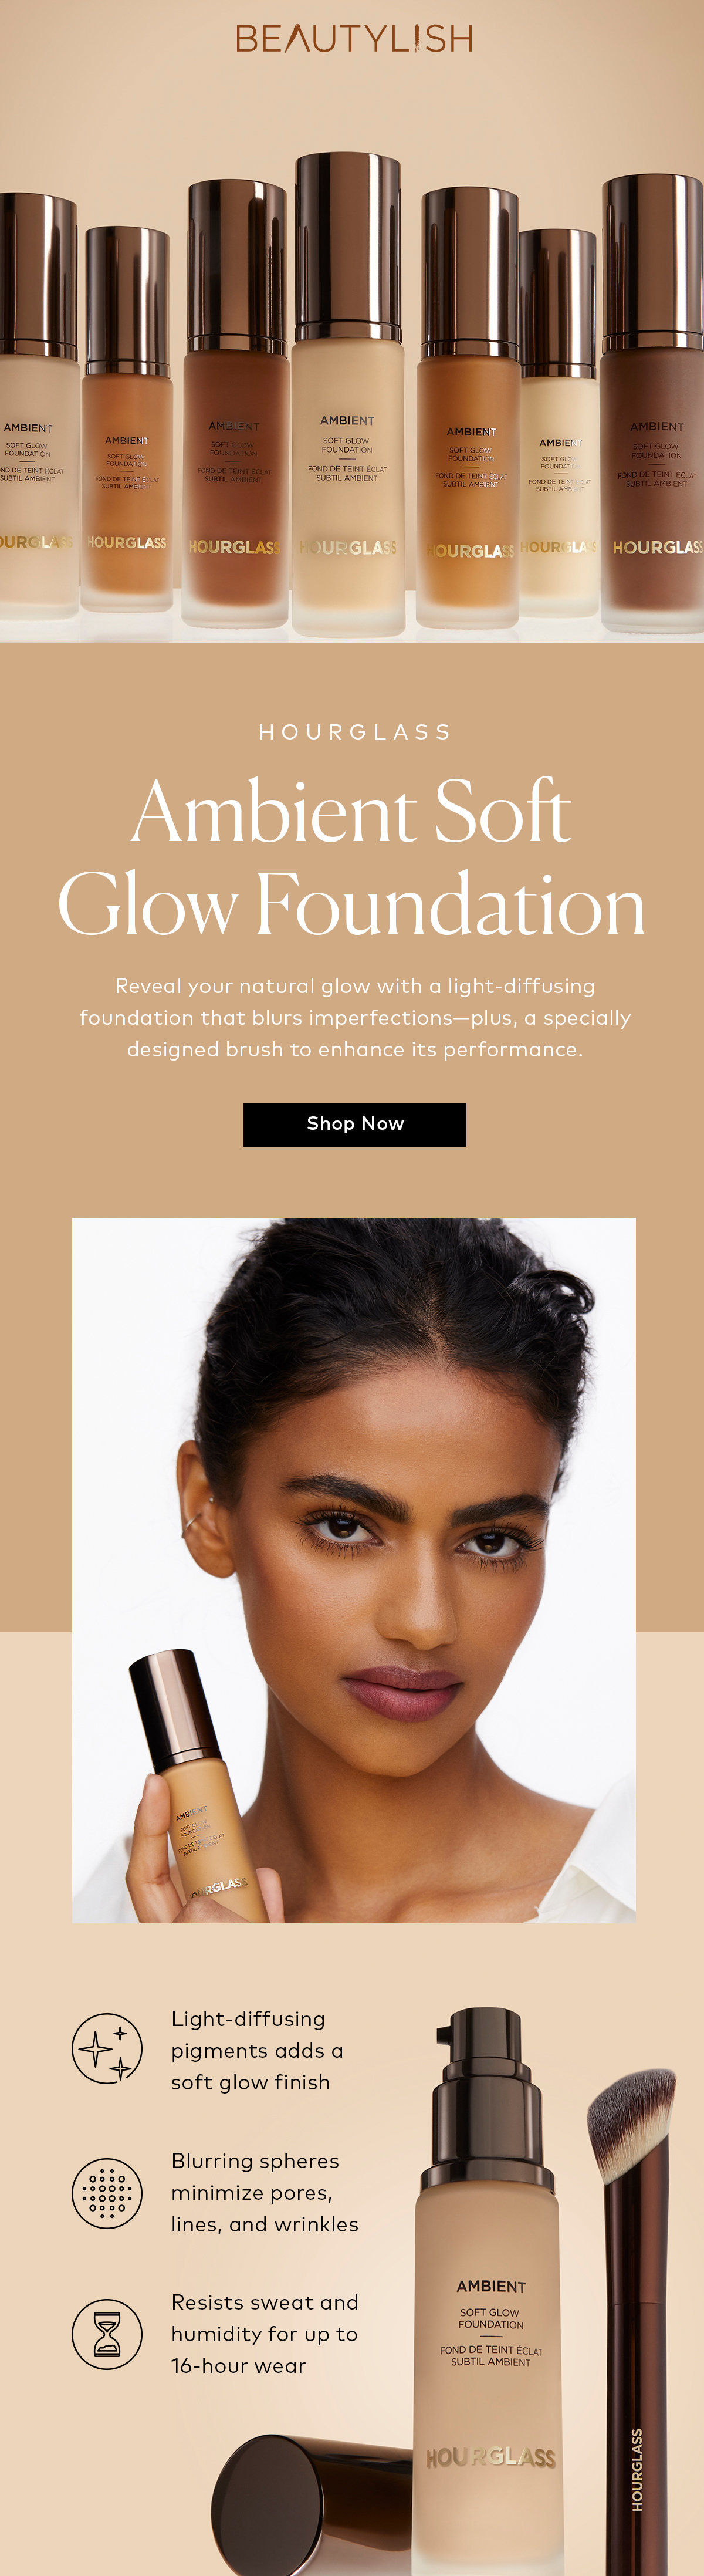 Shop the Hourglass Ambient Soft Glow Foundation on Beautylish.com